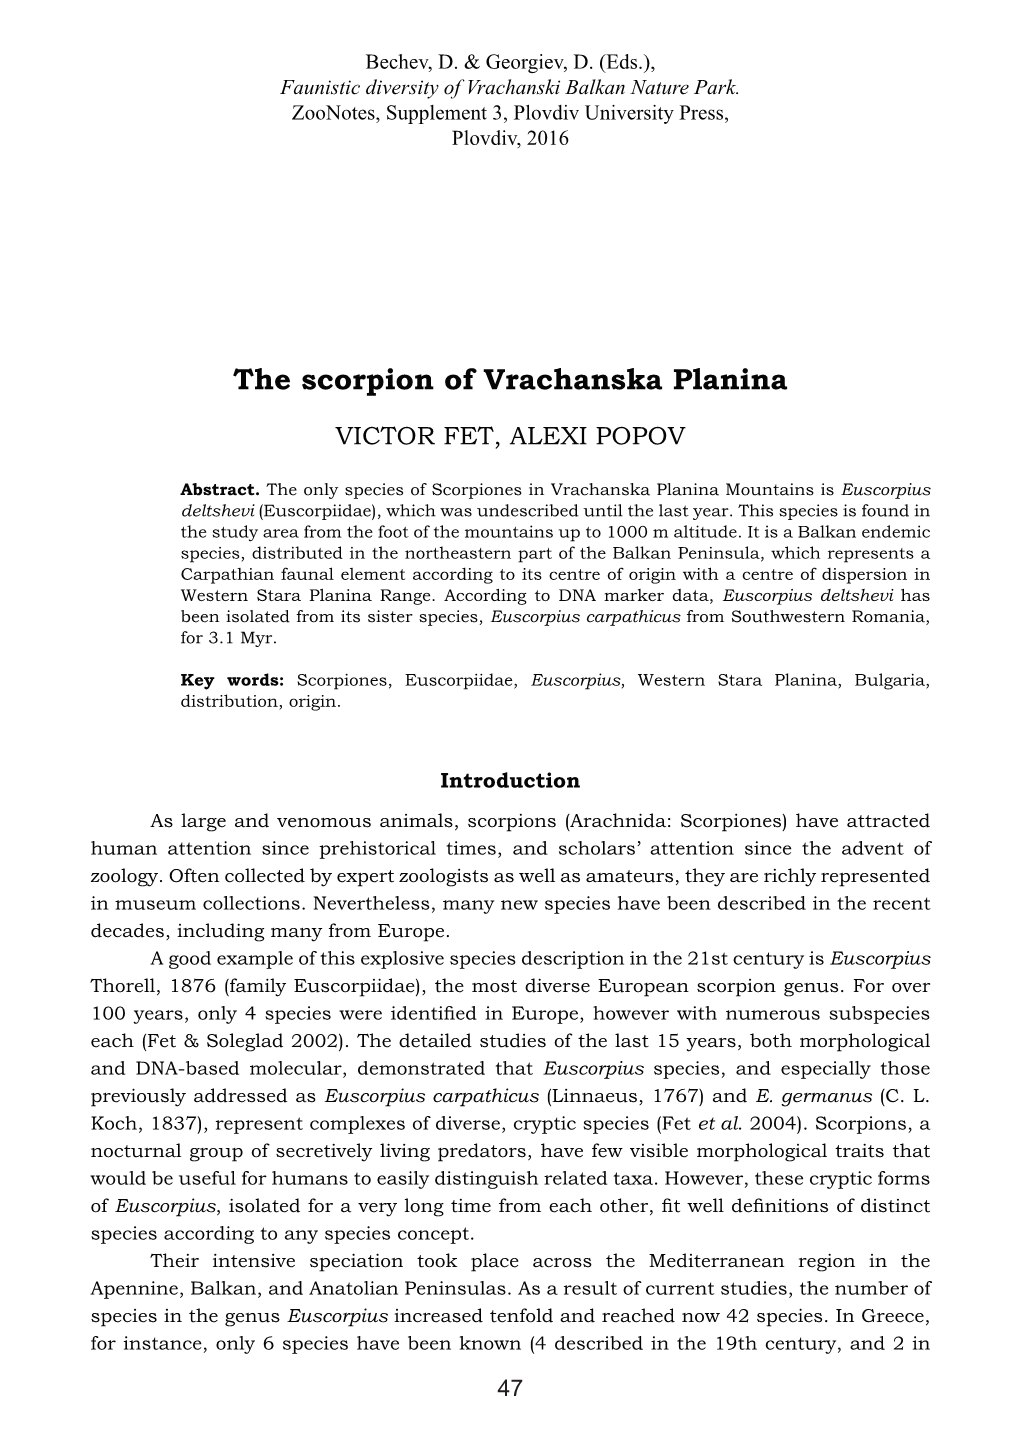 The Scorpion of Vrachanska Planina